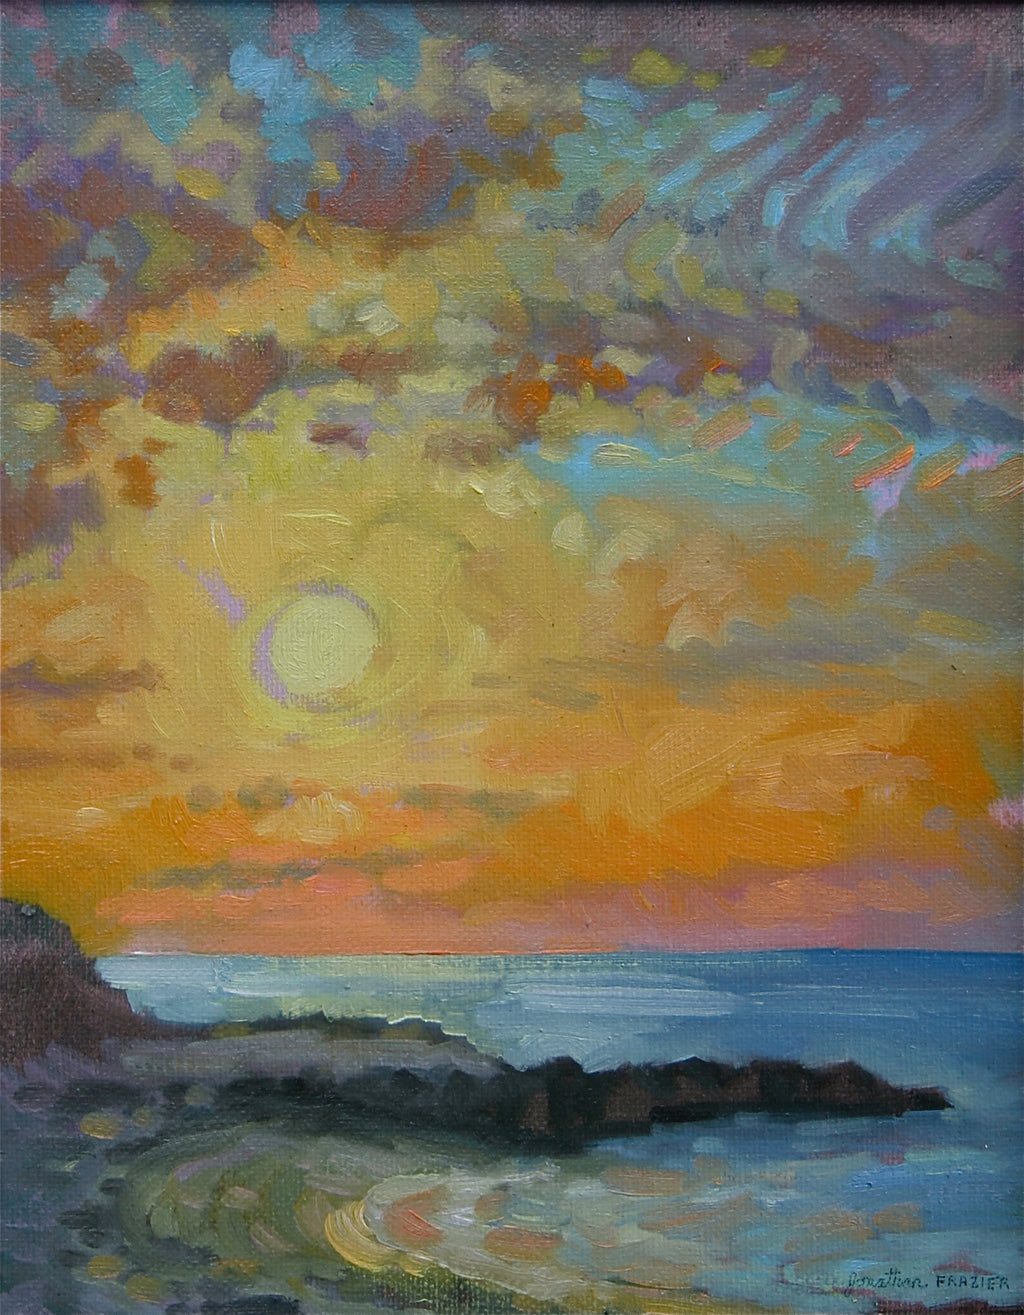 Cape Sunset by Jonathan Frazier